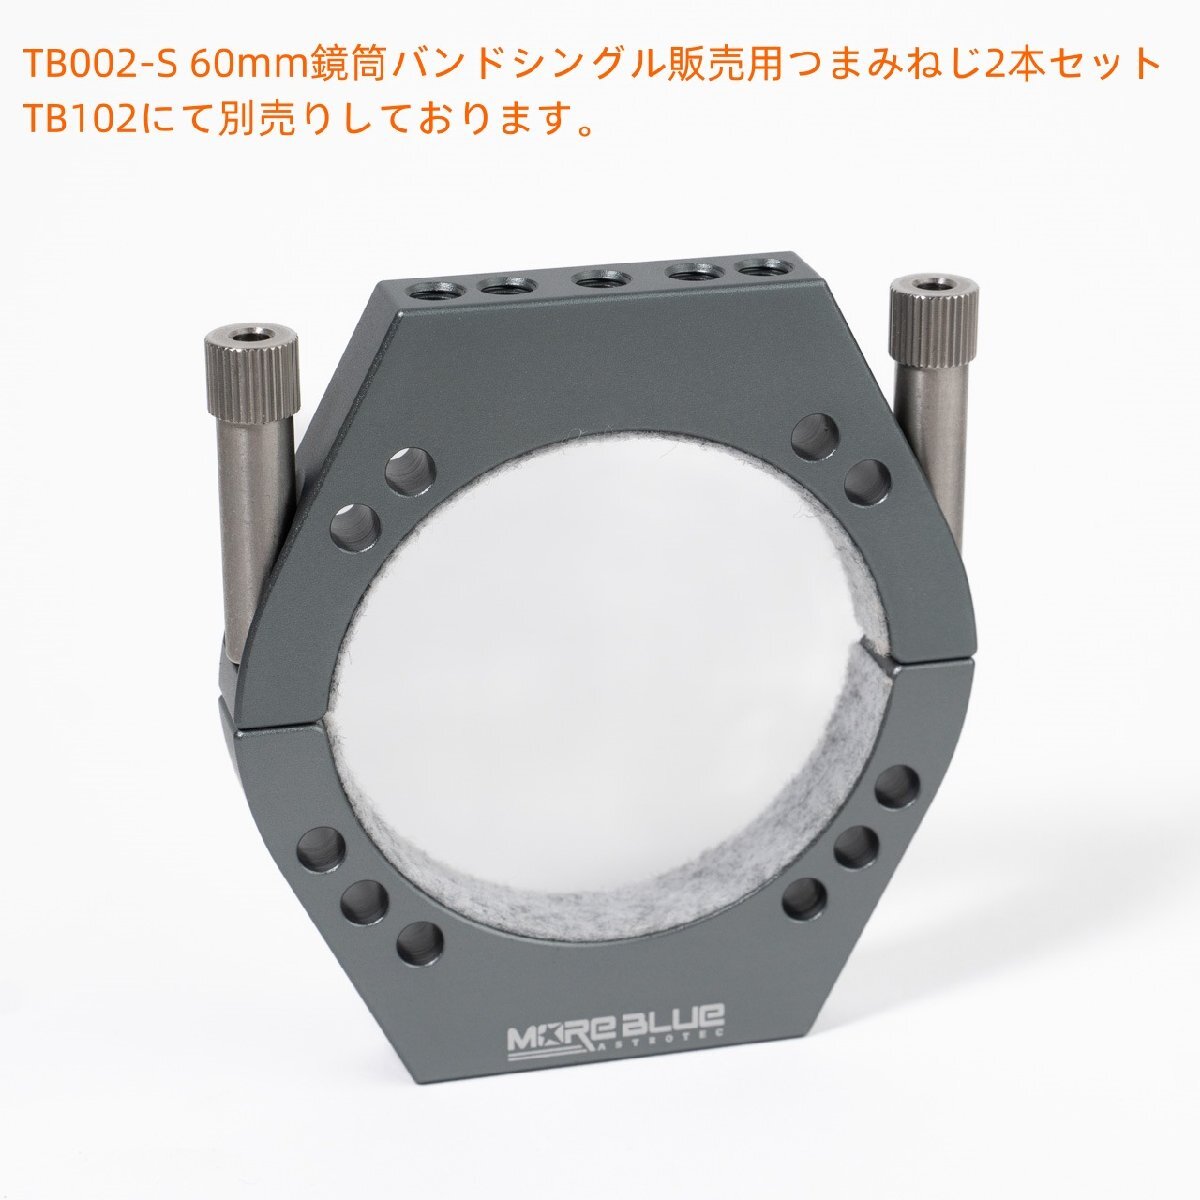 TB002-S super light weight . design inside diameter 60mm mirror tube band single sale click post uniform carriage 185 jpy 